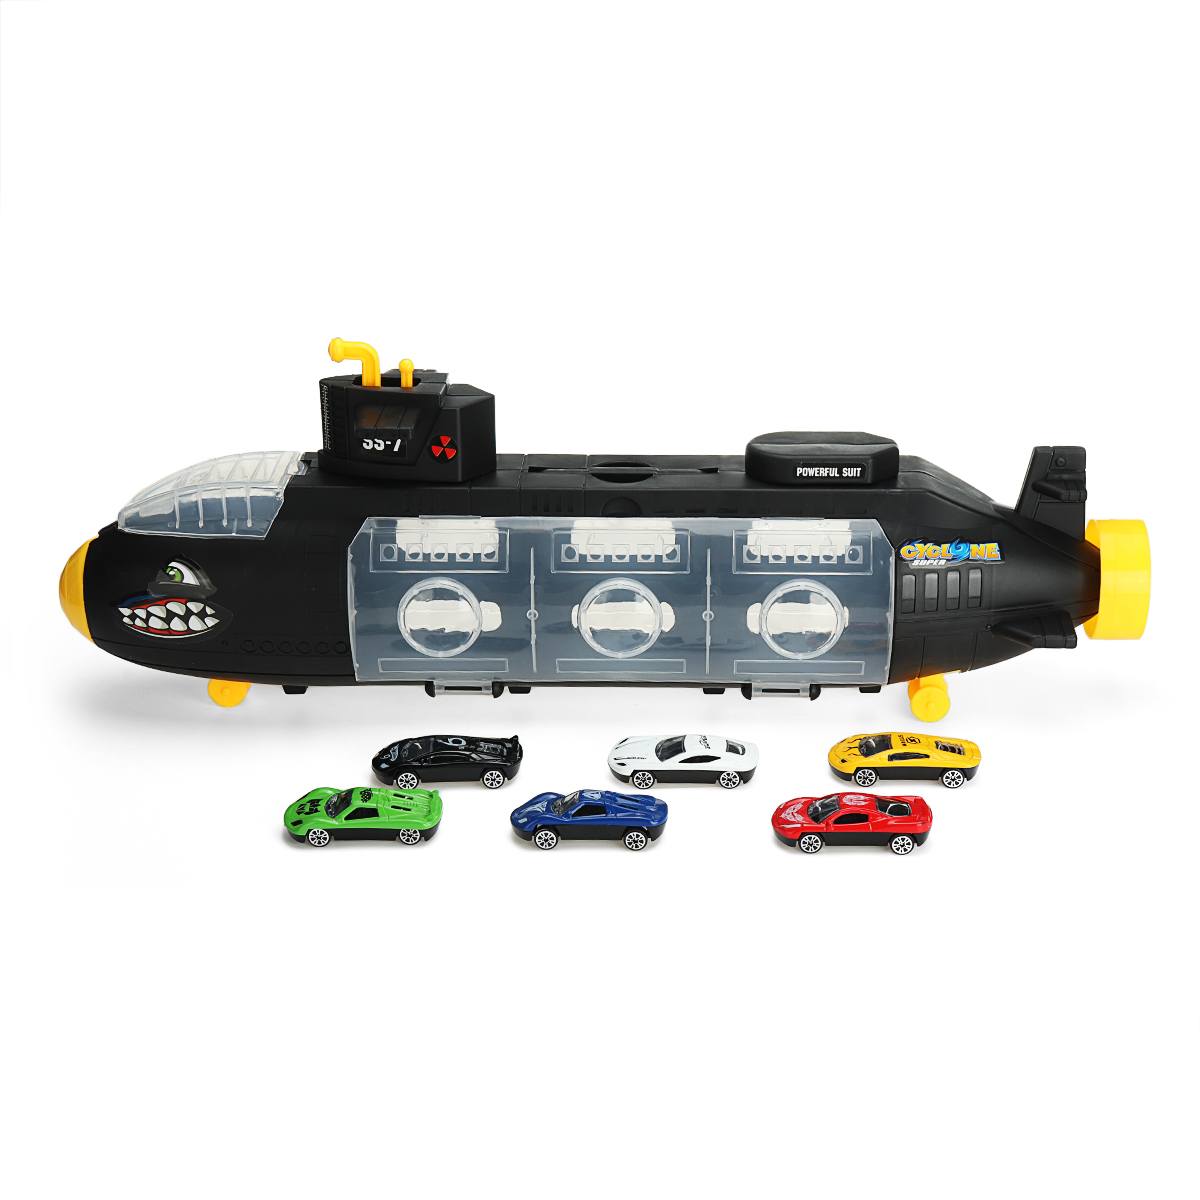 Alloy-Inertia-Shark-Artillery-Submarine-Vehicle-Set-Diecast-Car-Model-Toys-for-Kids-Gift-1651727-3